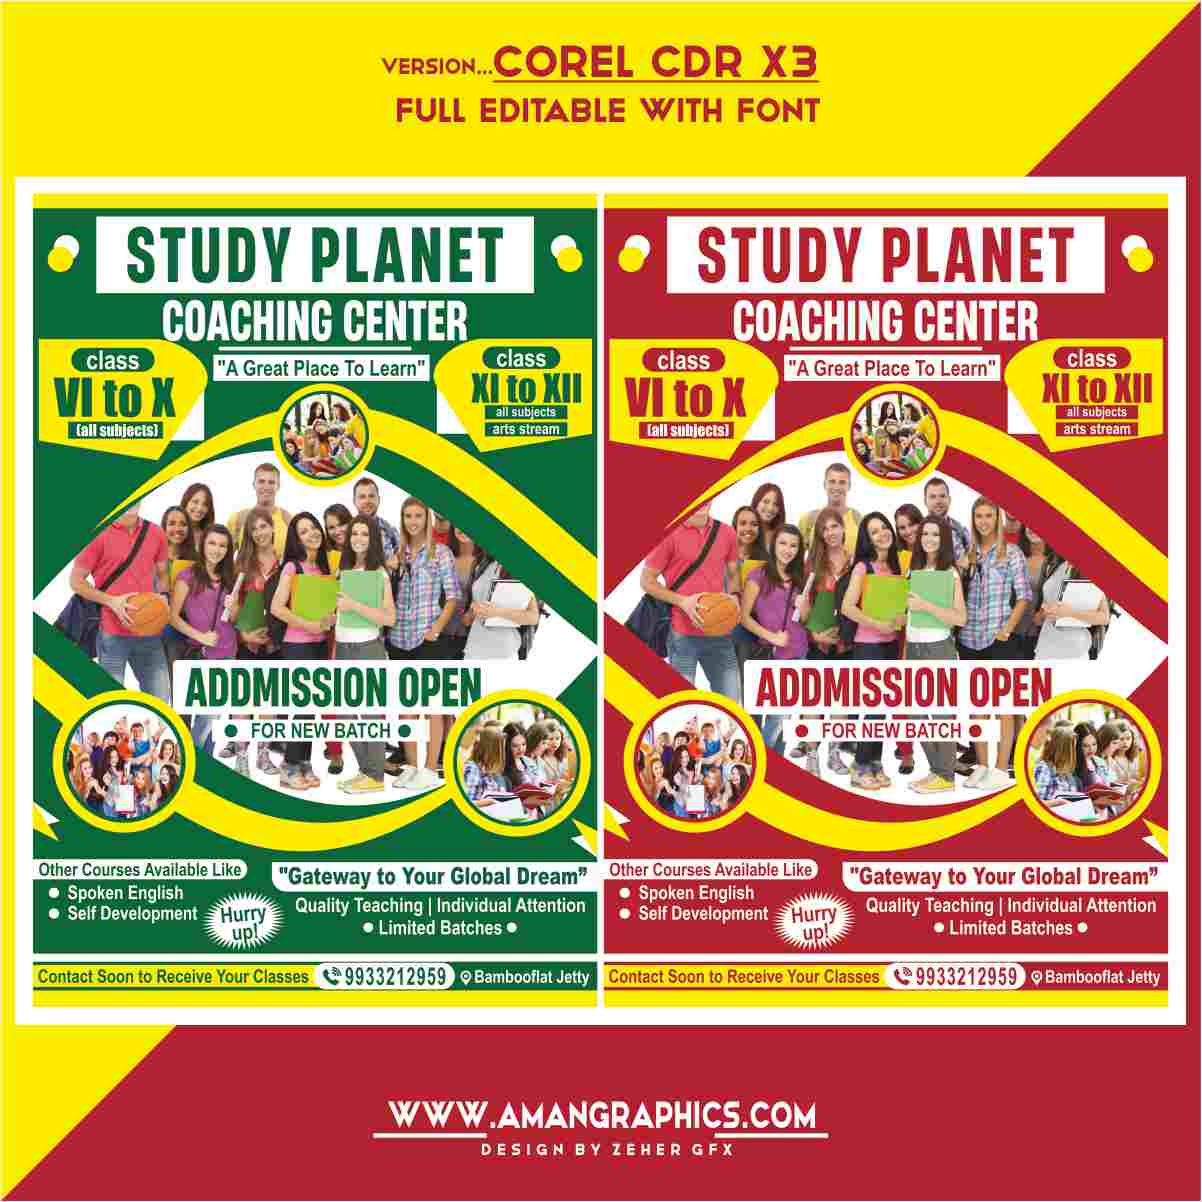 Study Planet Coaching Center Pamphlet Design Cdr File FLEX BANNER FLEX